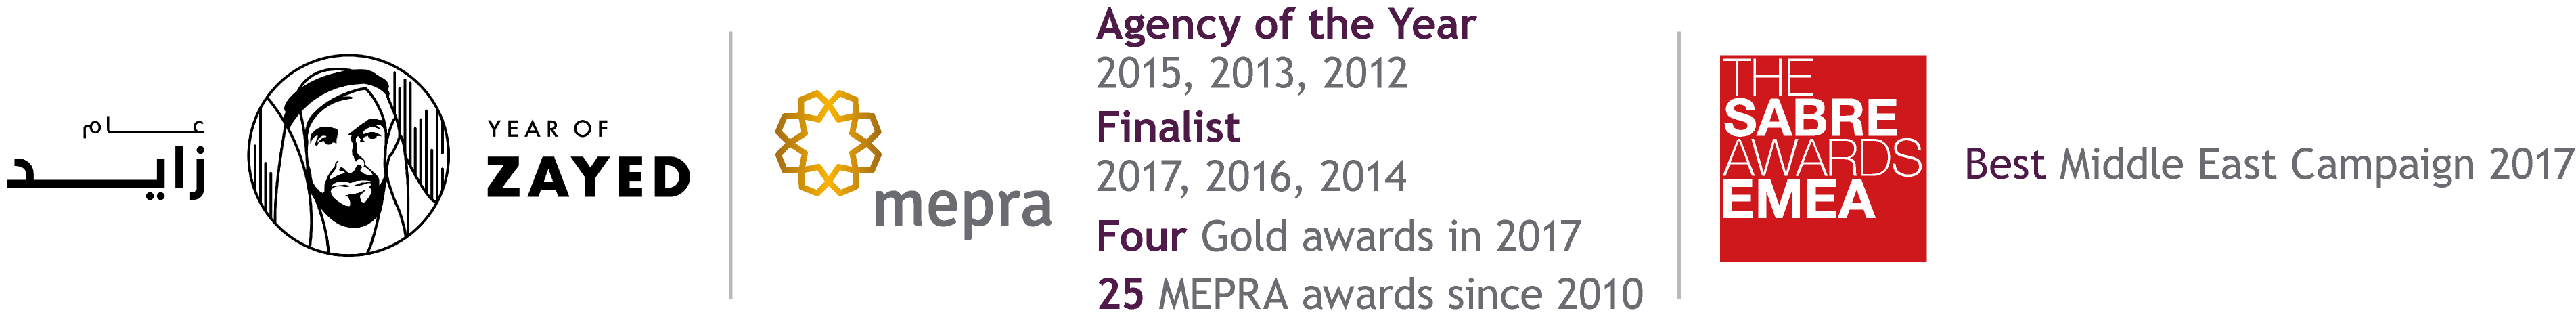 The Year of Zayed - MEPRA Award winners - SABRE Awards EMEA winner